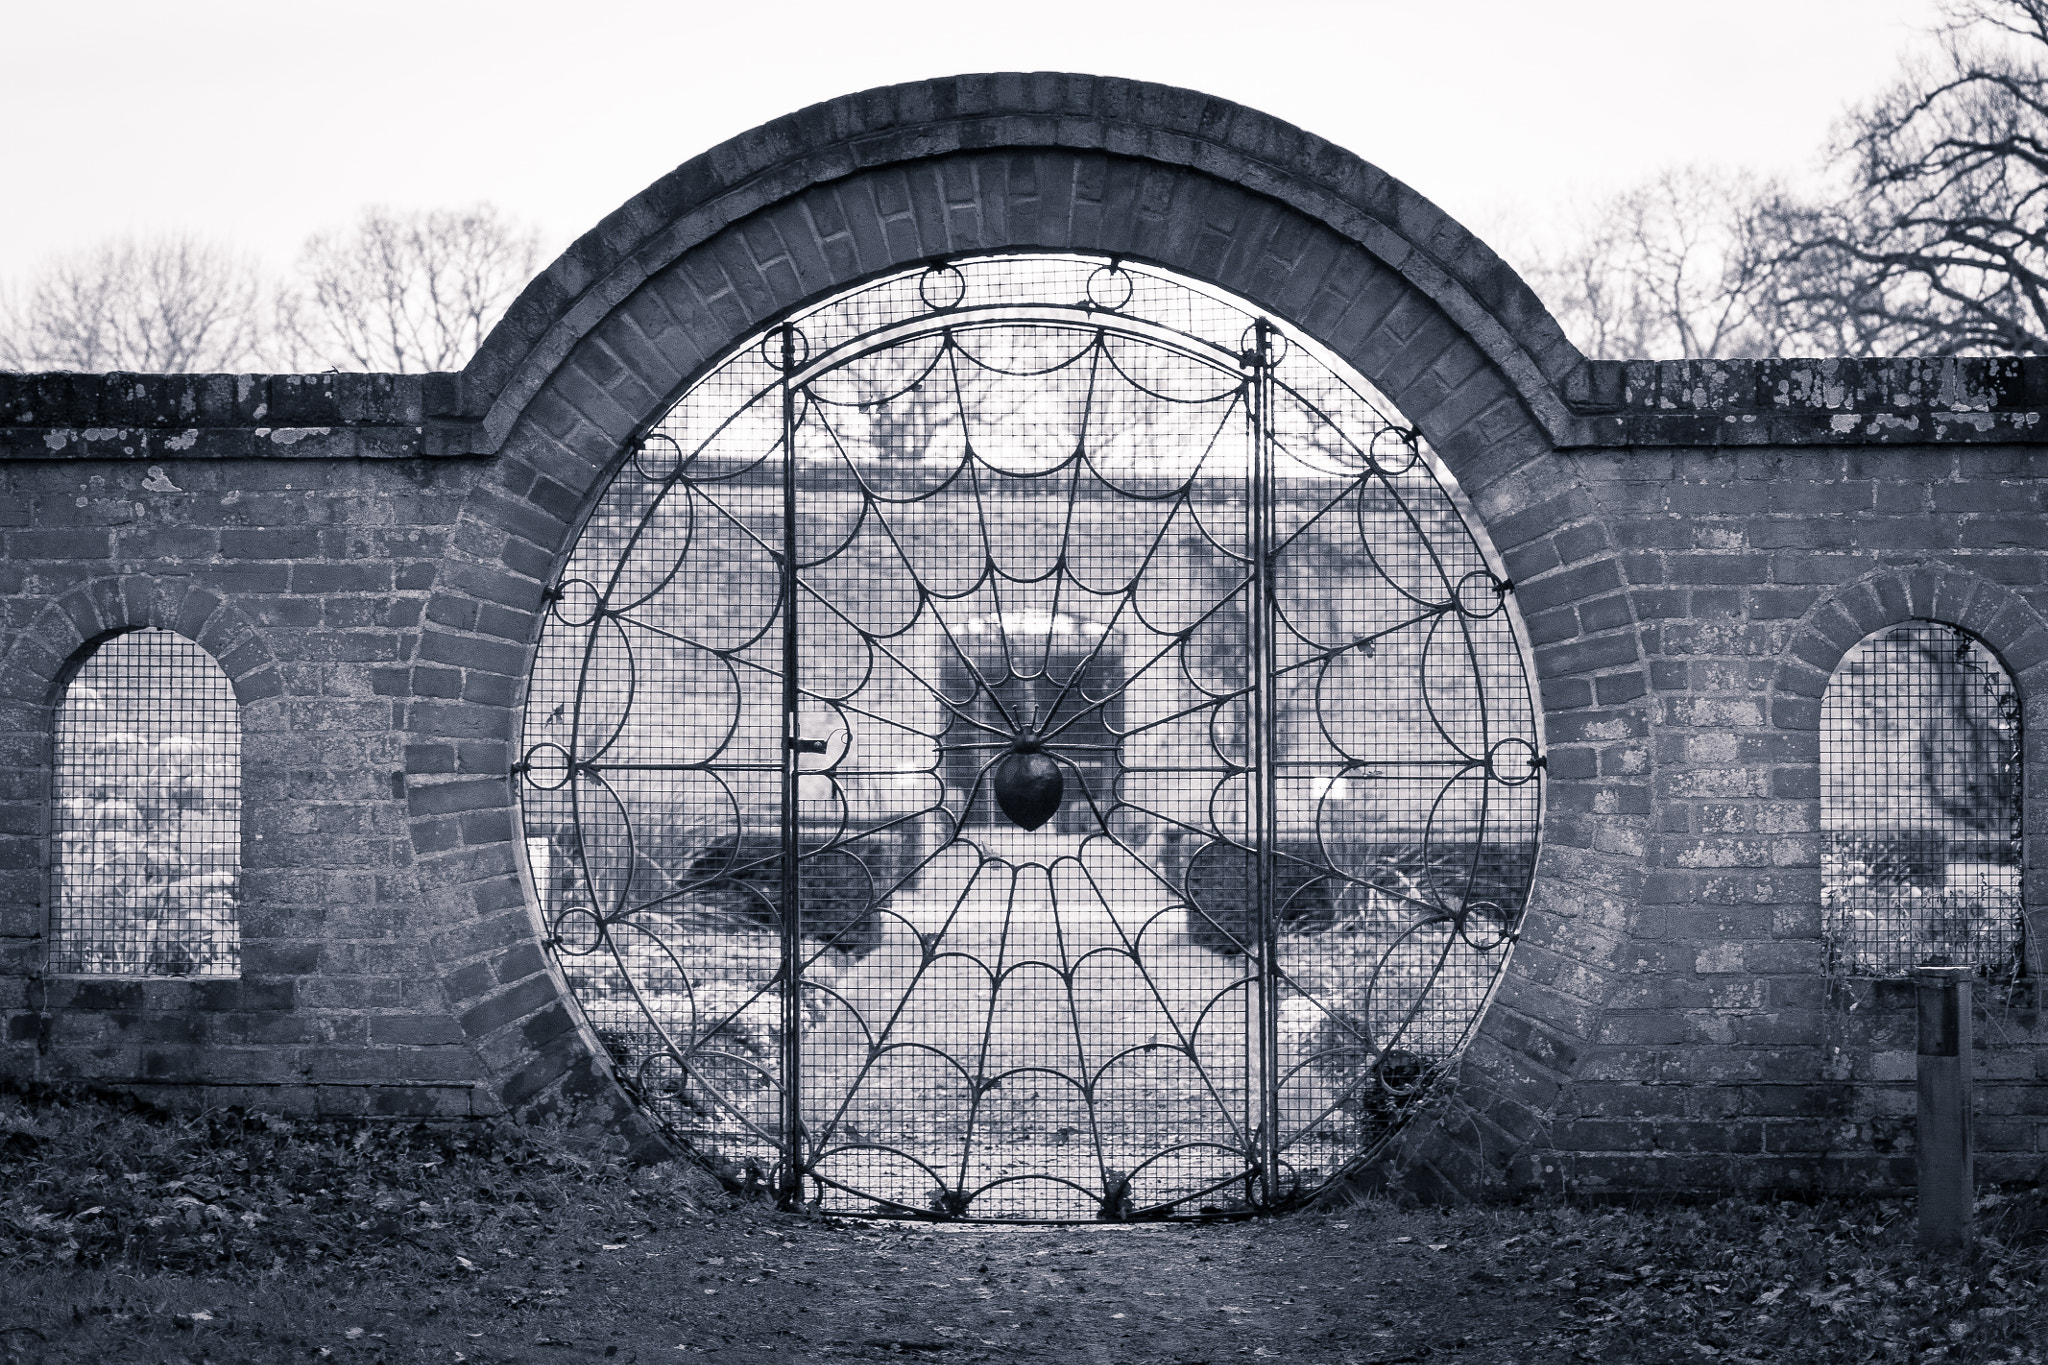 Spiderweb gate